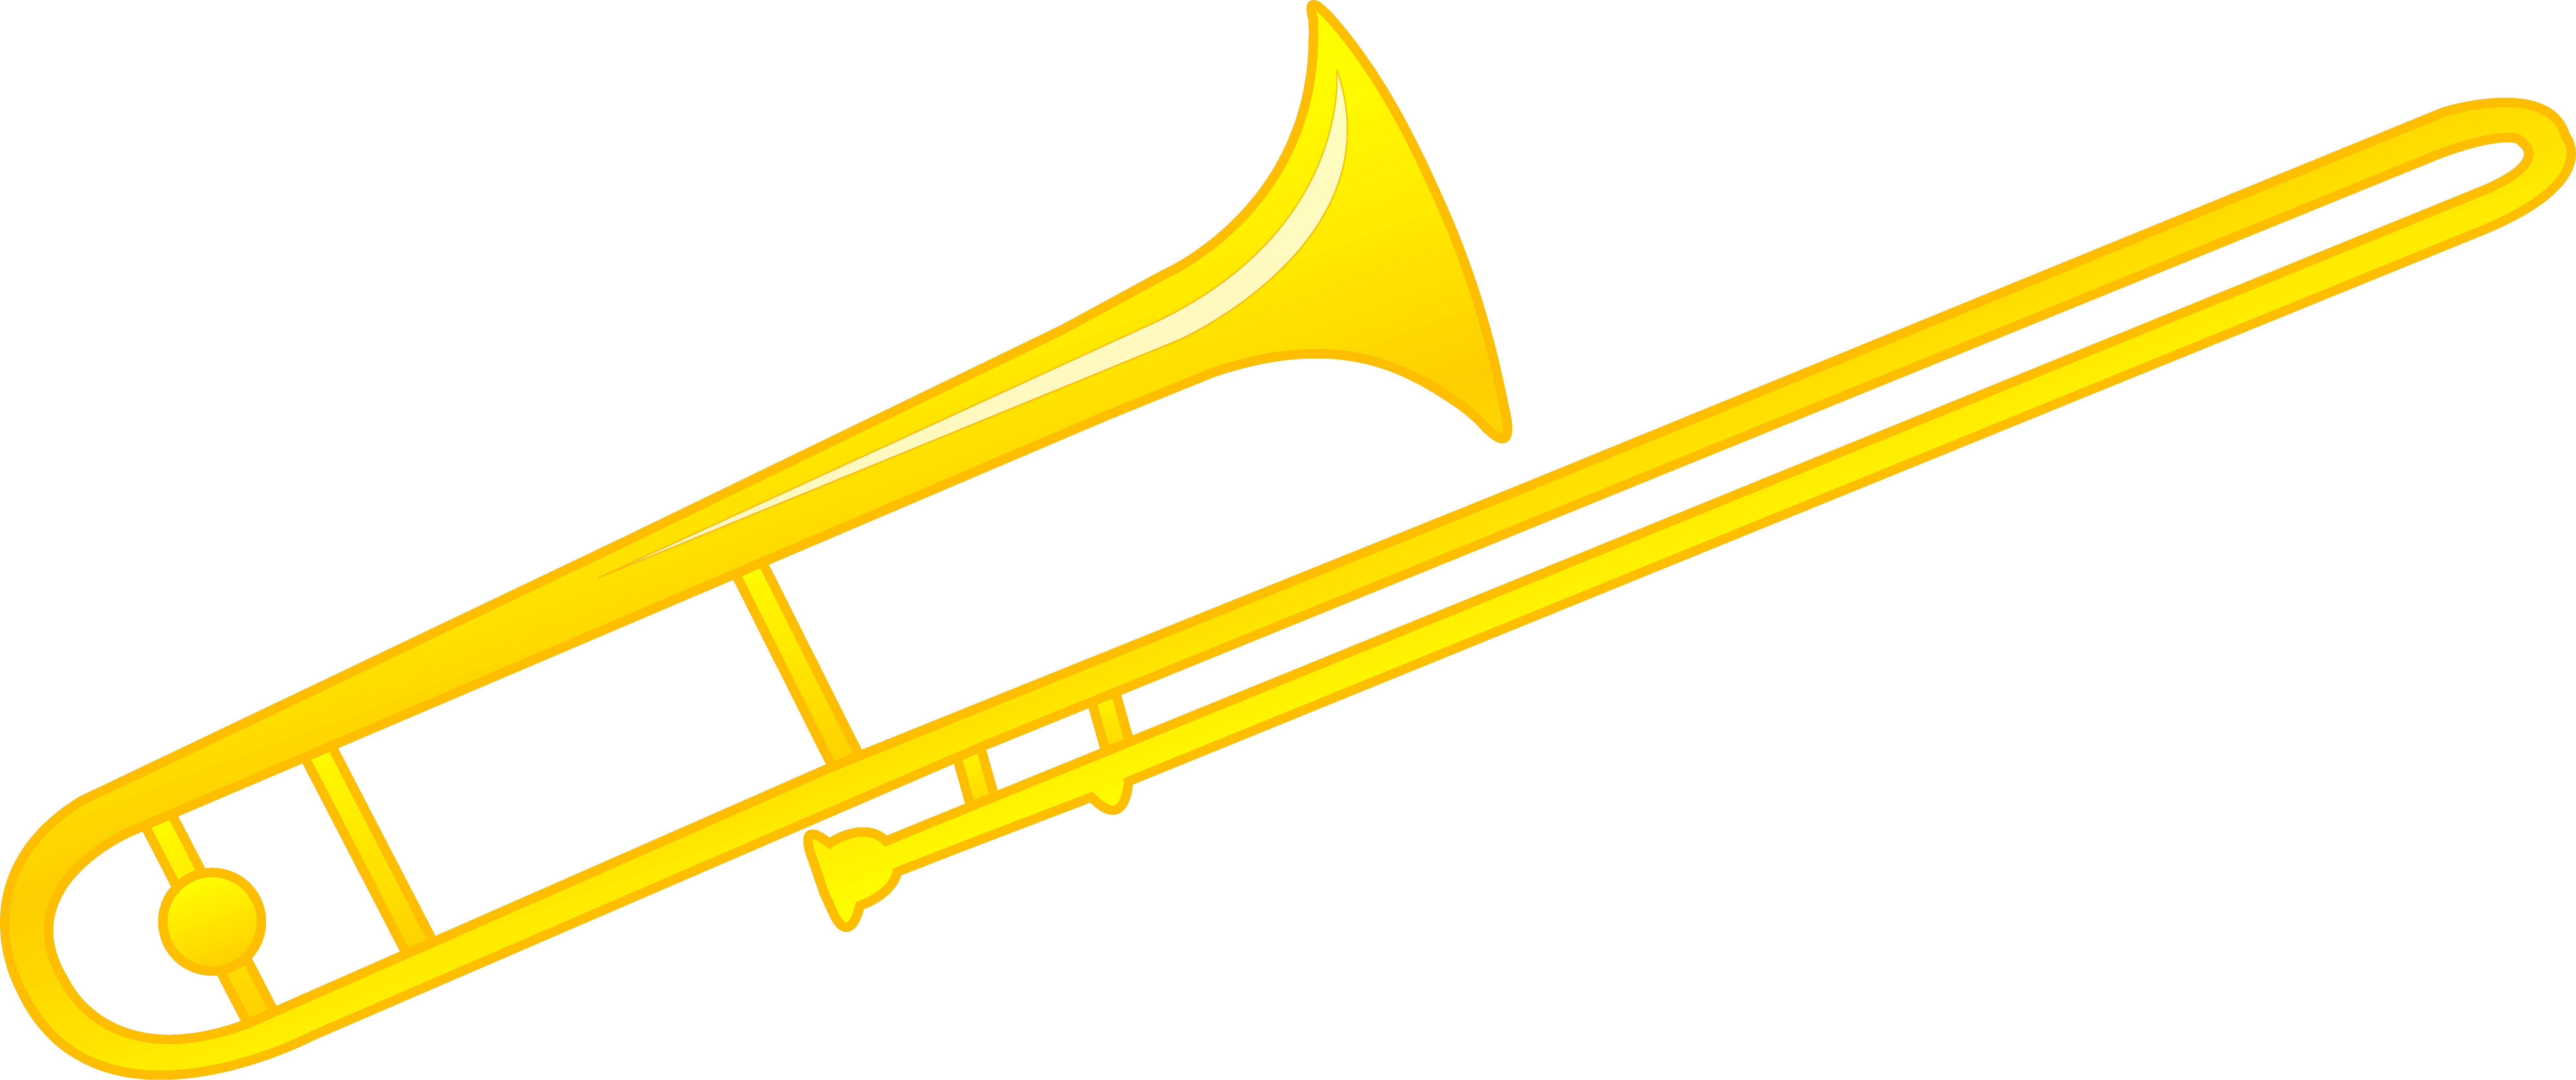 Trombone Clip Art